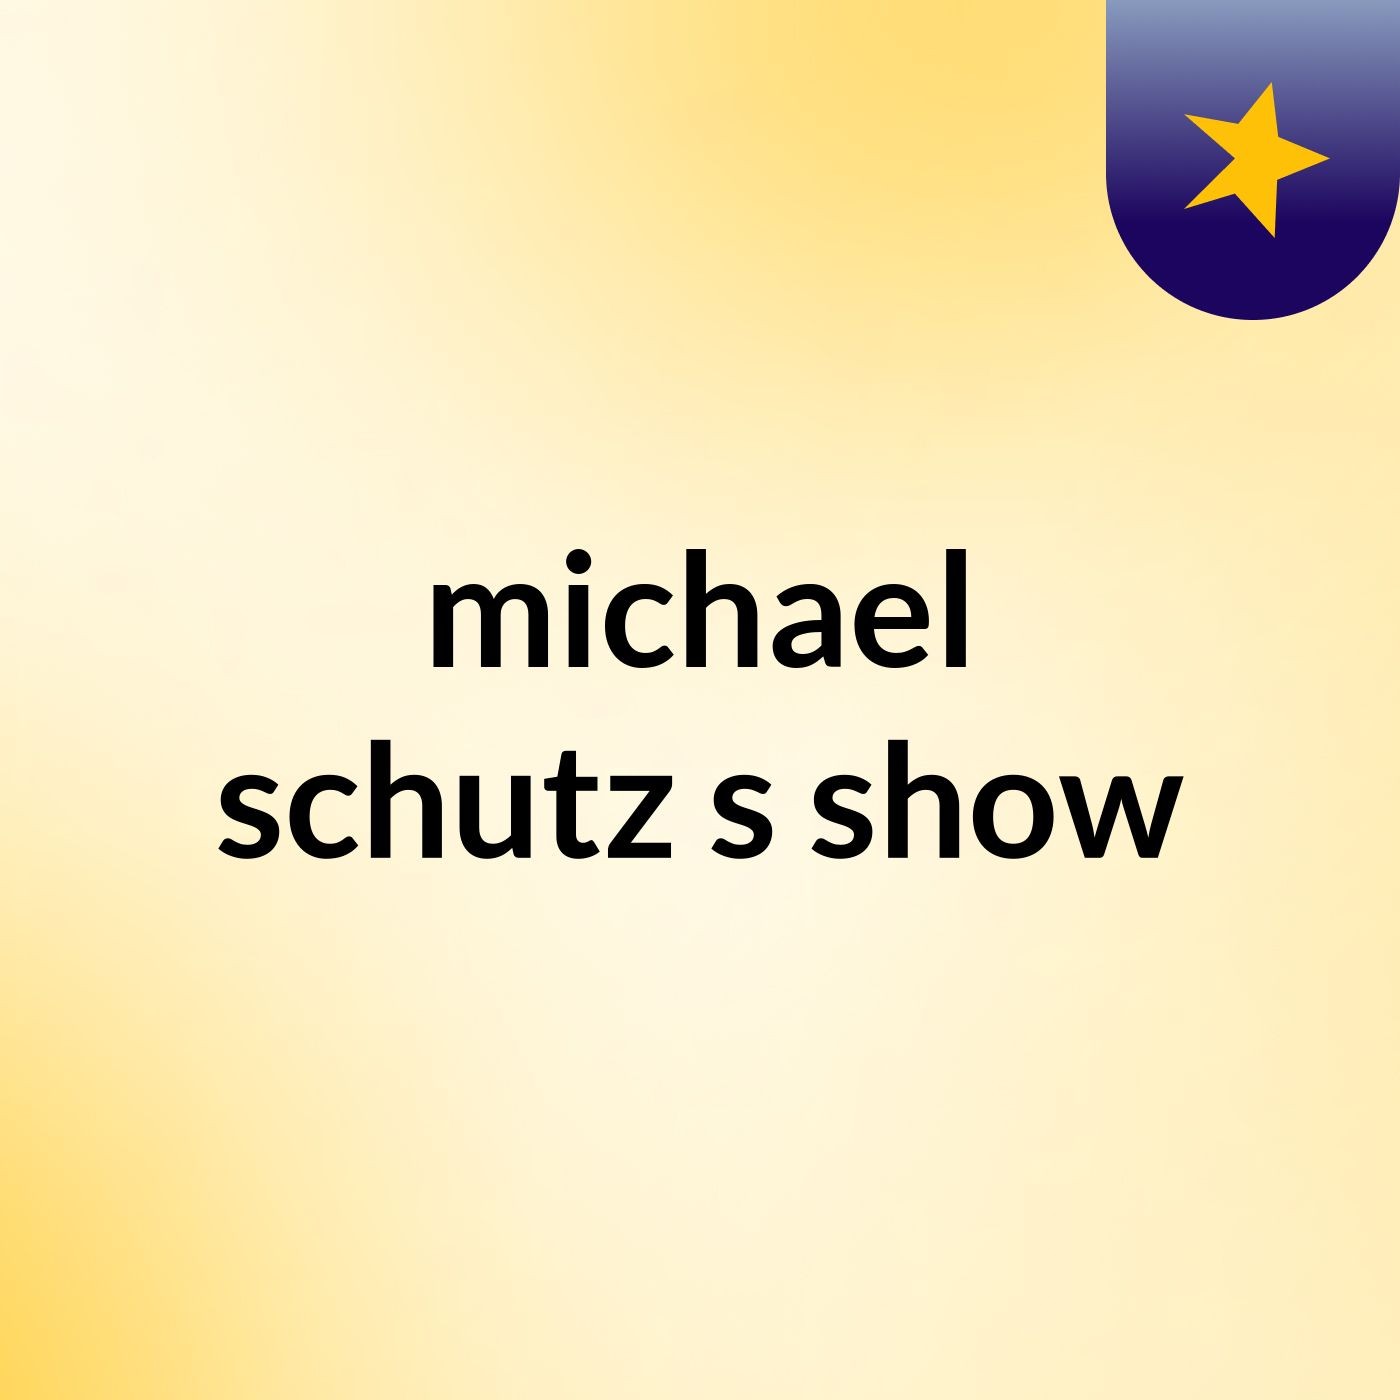 michael schutz's show